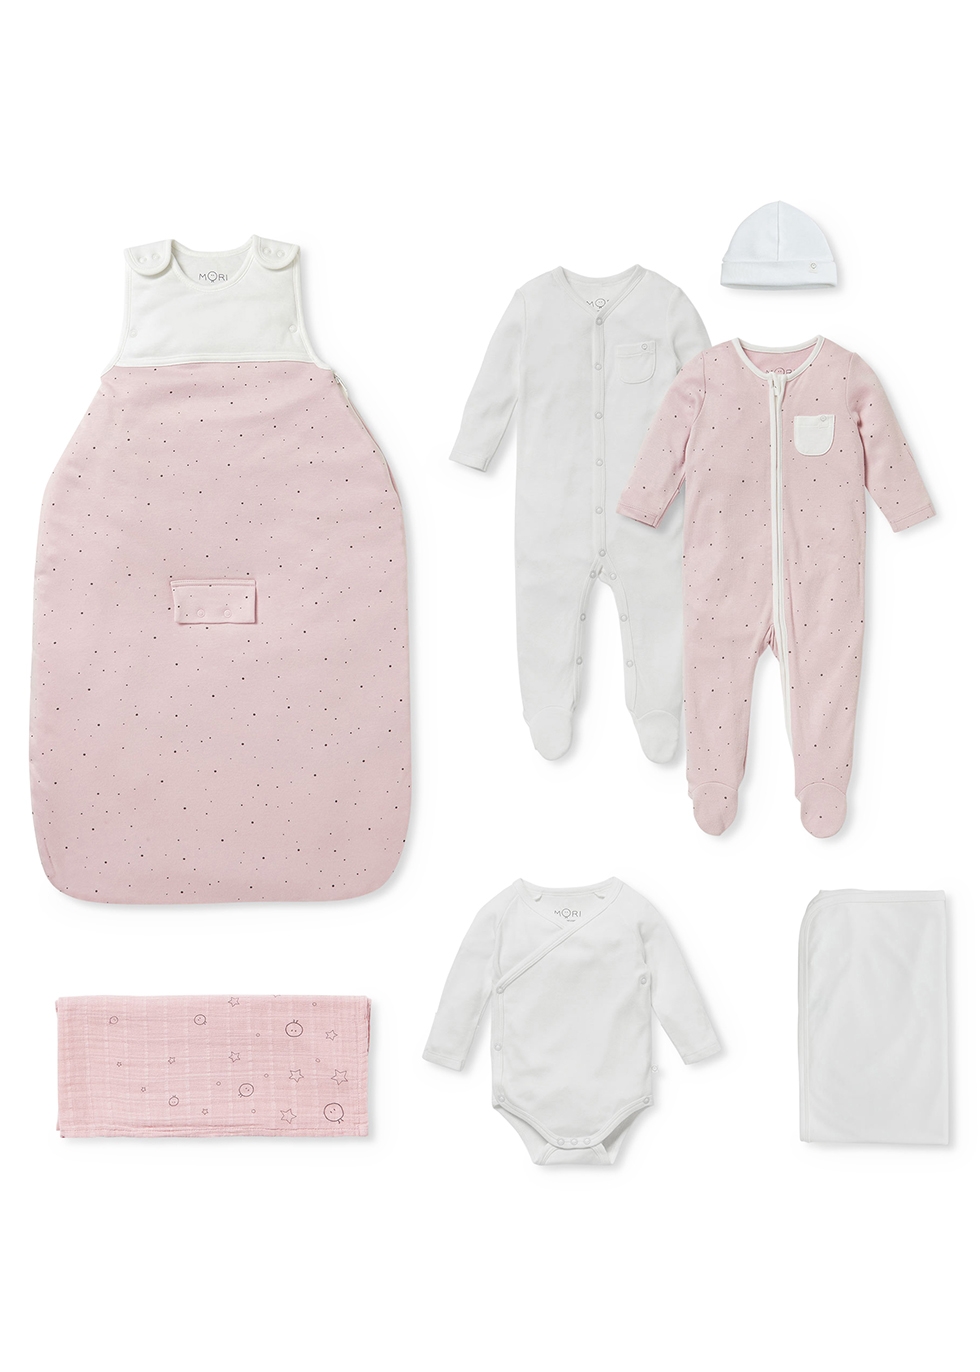 Mori Babies' My First Summer White And Pink Jersey Sleep Set (6 Months)